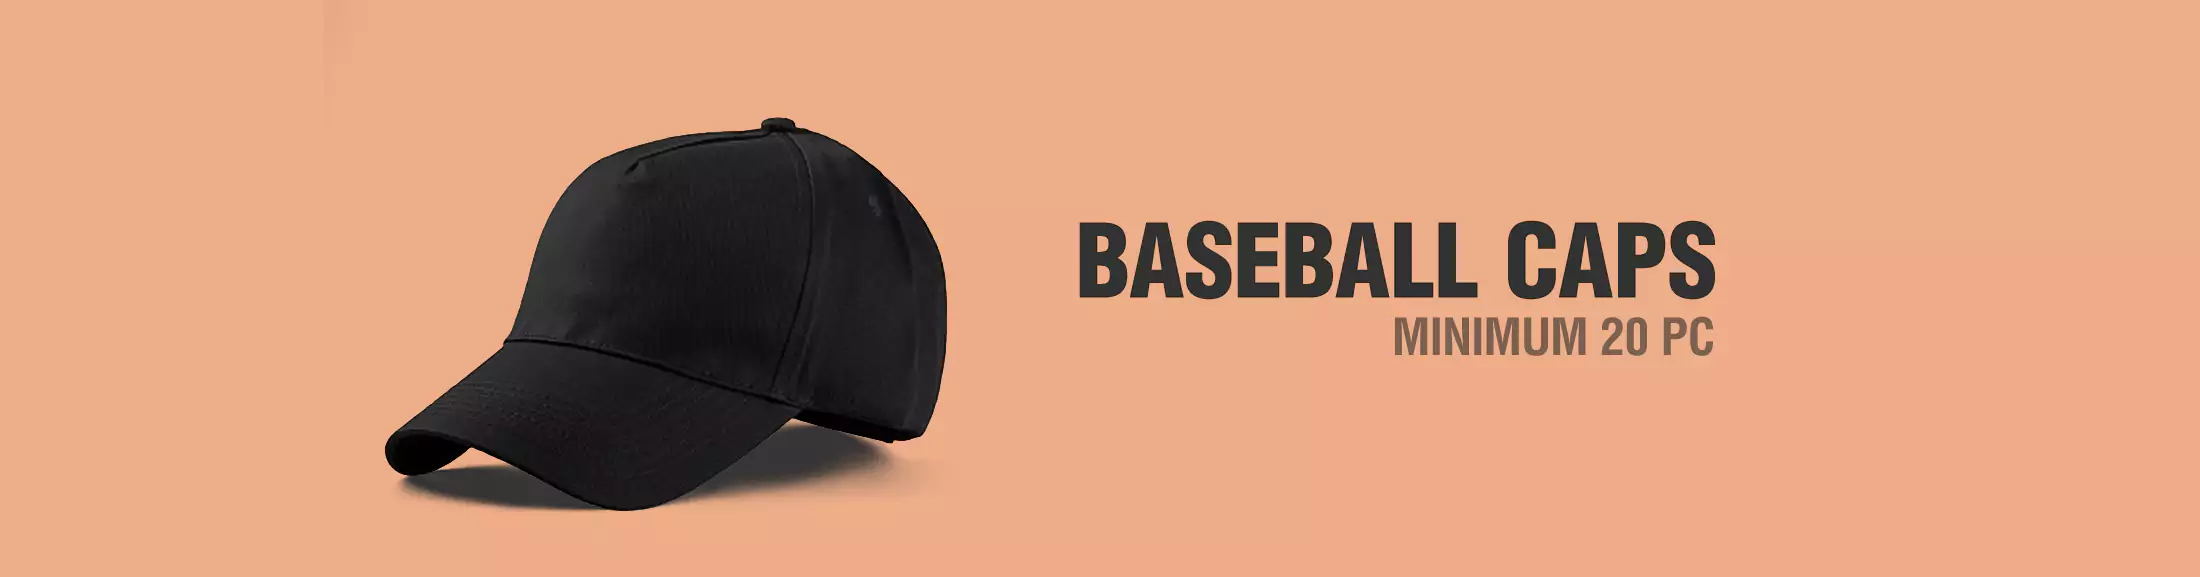 Promotional Baseball Cap